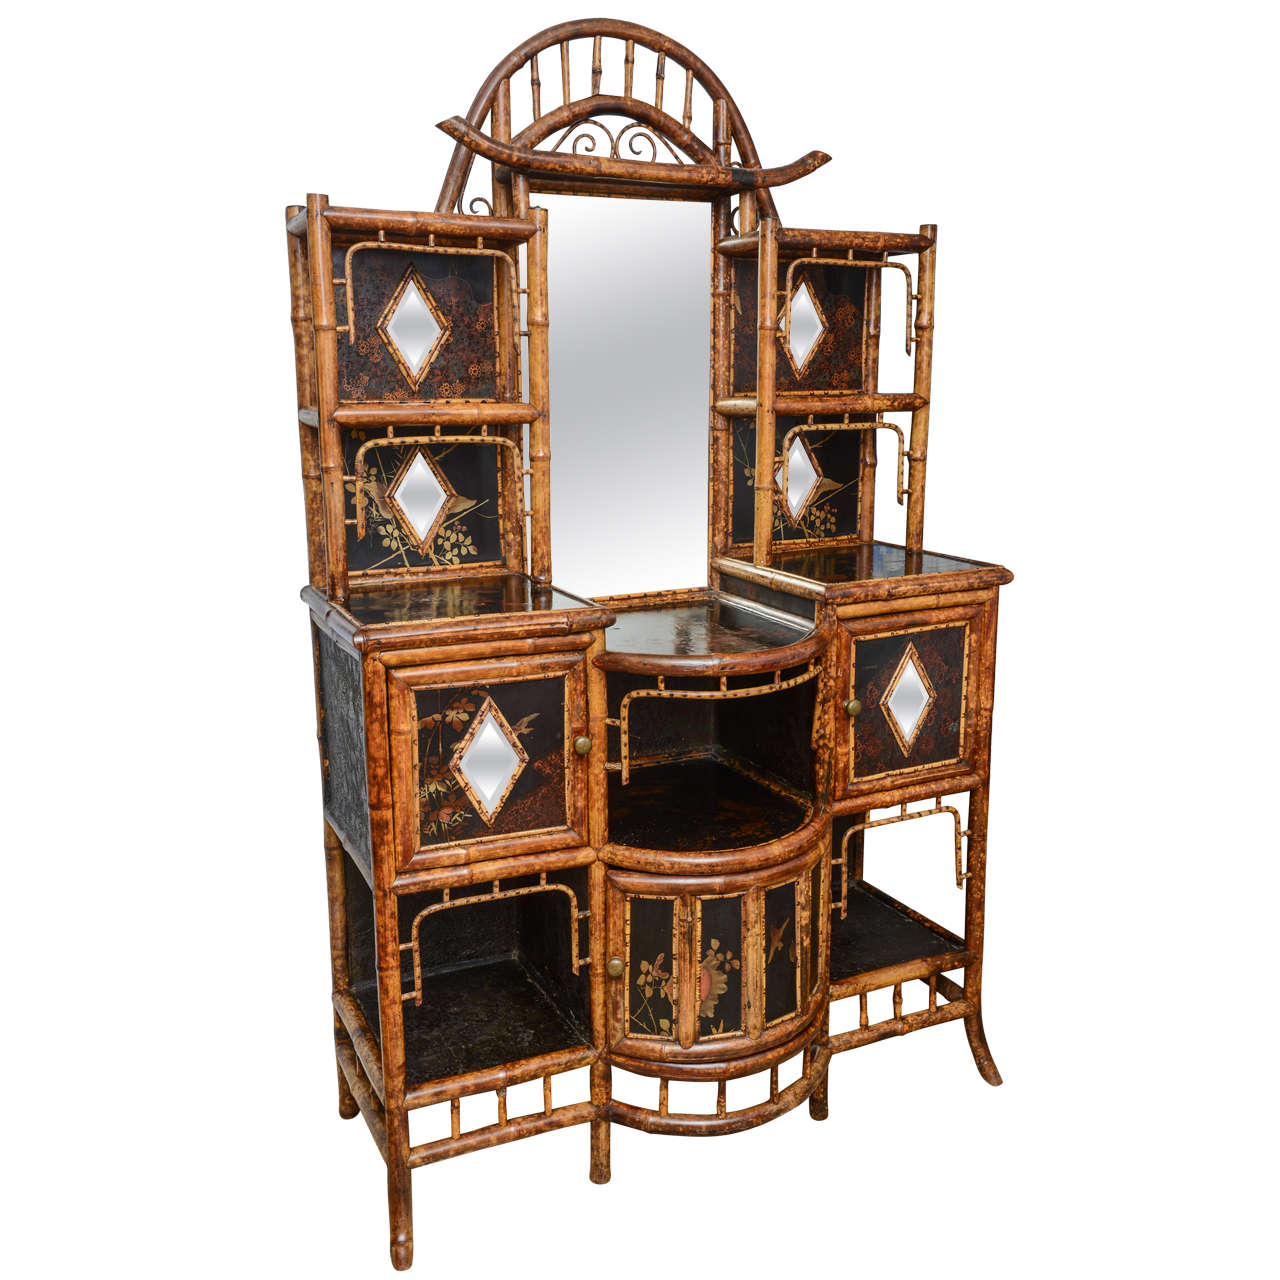 Rare 19th Century English Bamboo Cabinet